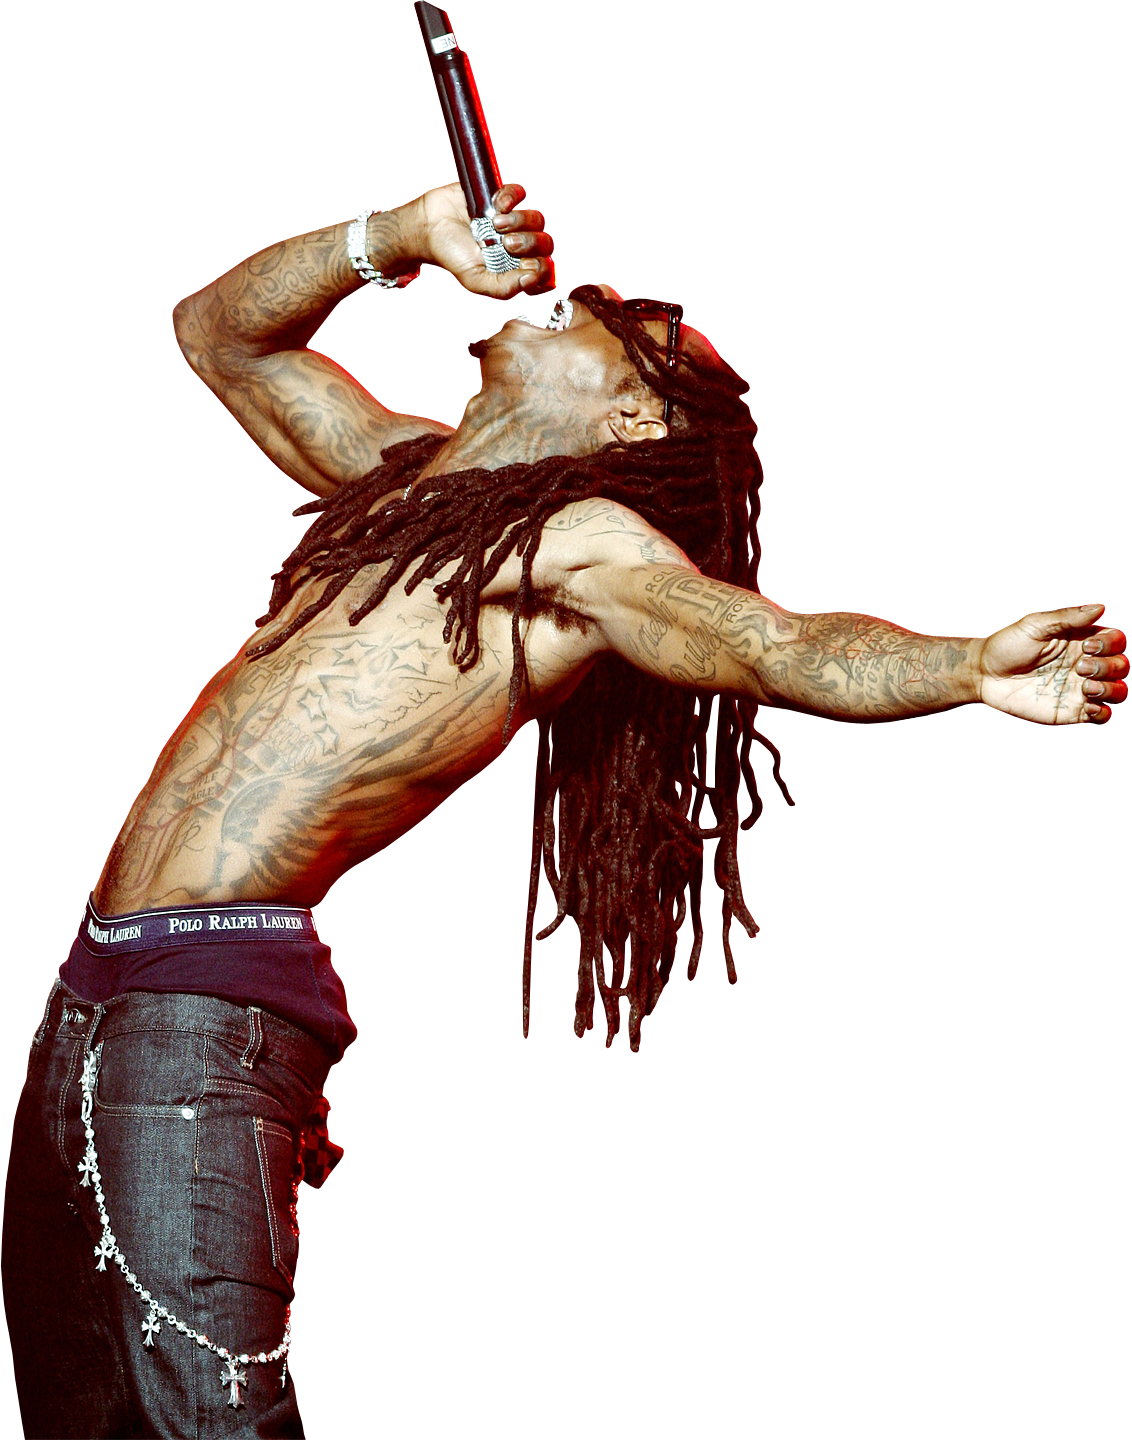 Lil Wayne.png